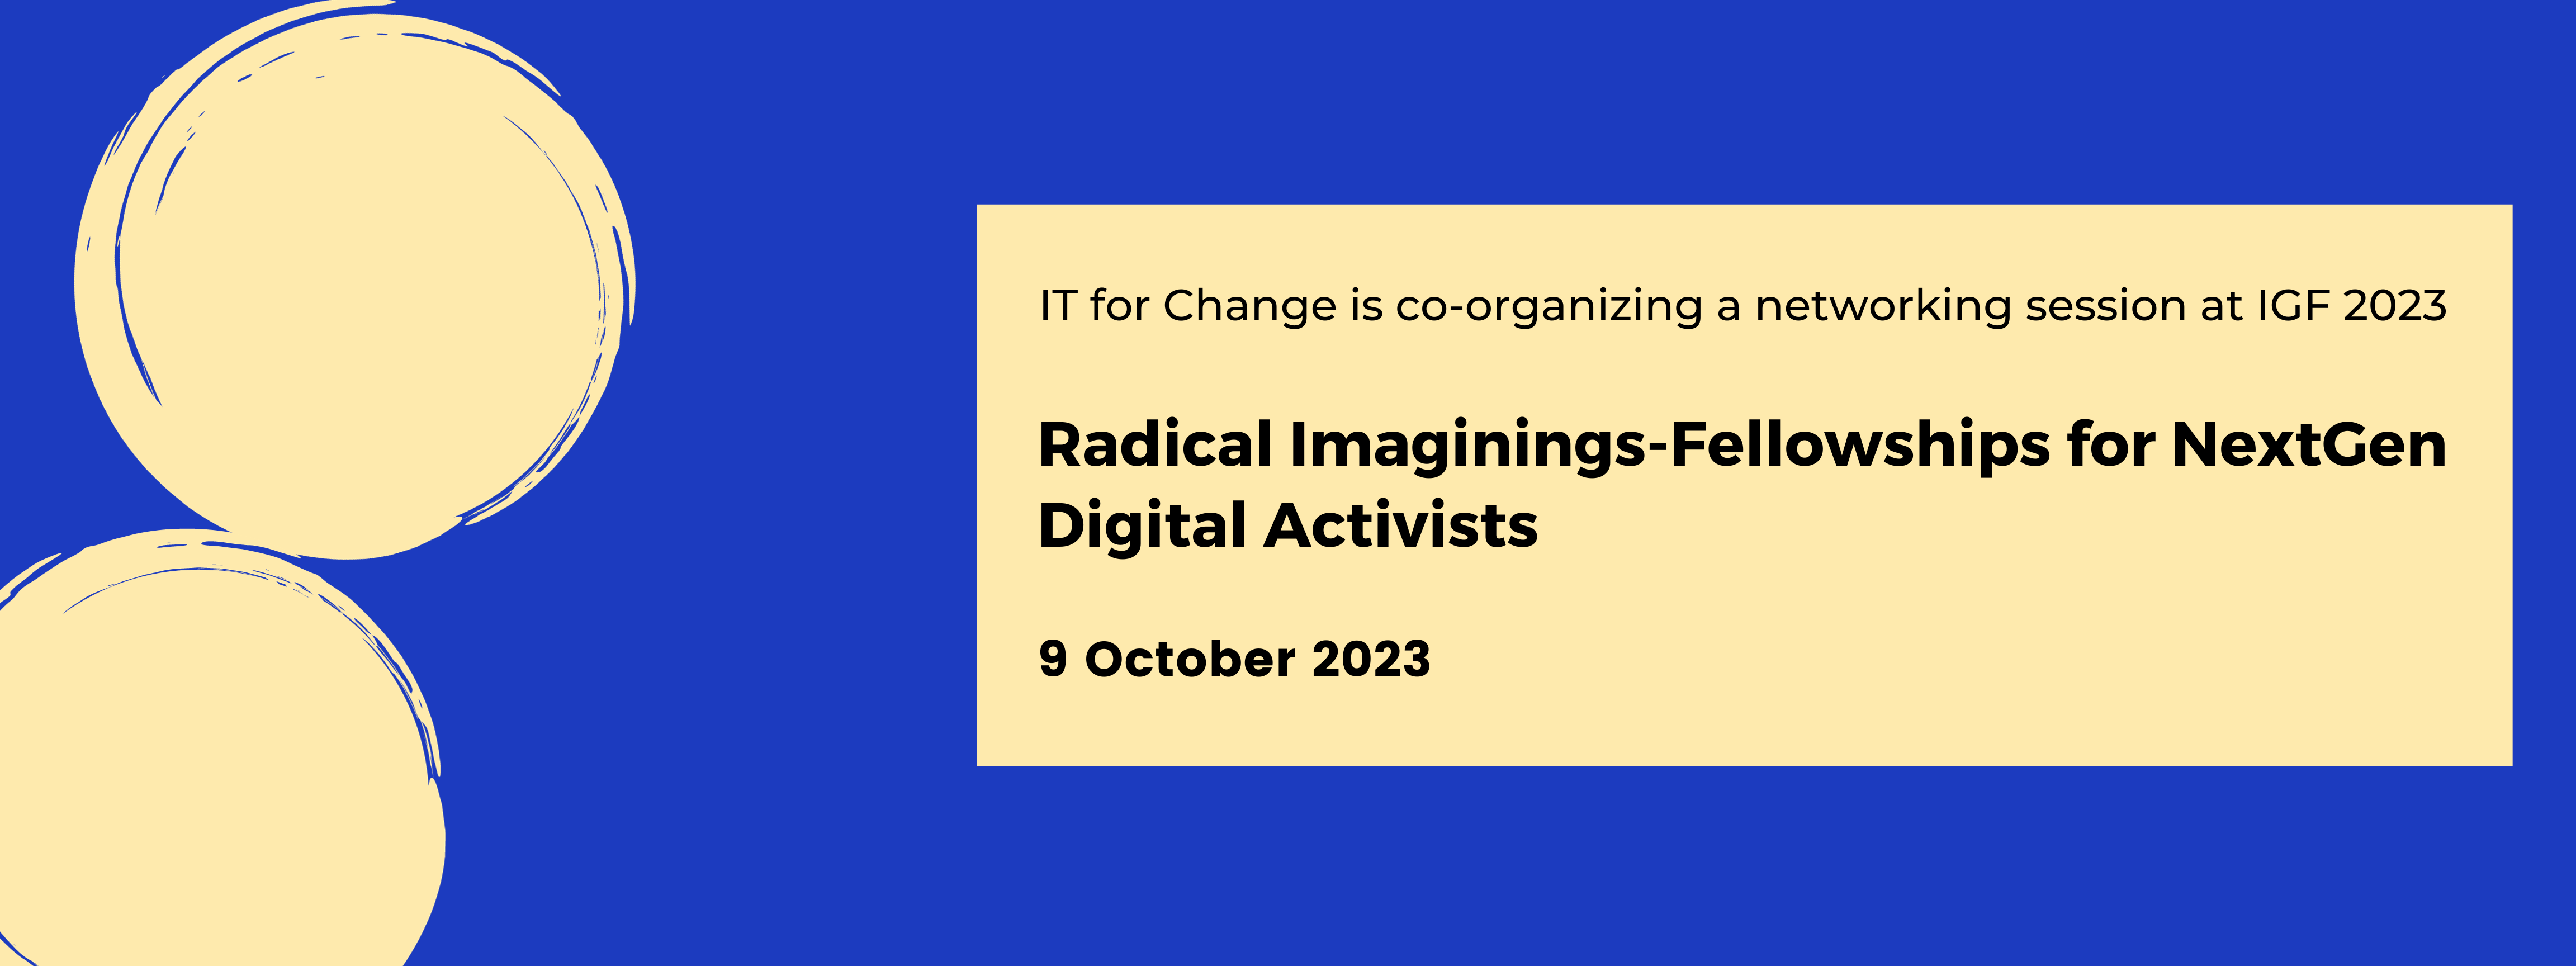 Radical Imaginings-Fellowships for NextGen Digital Activists